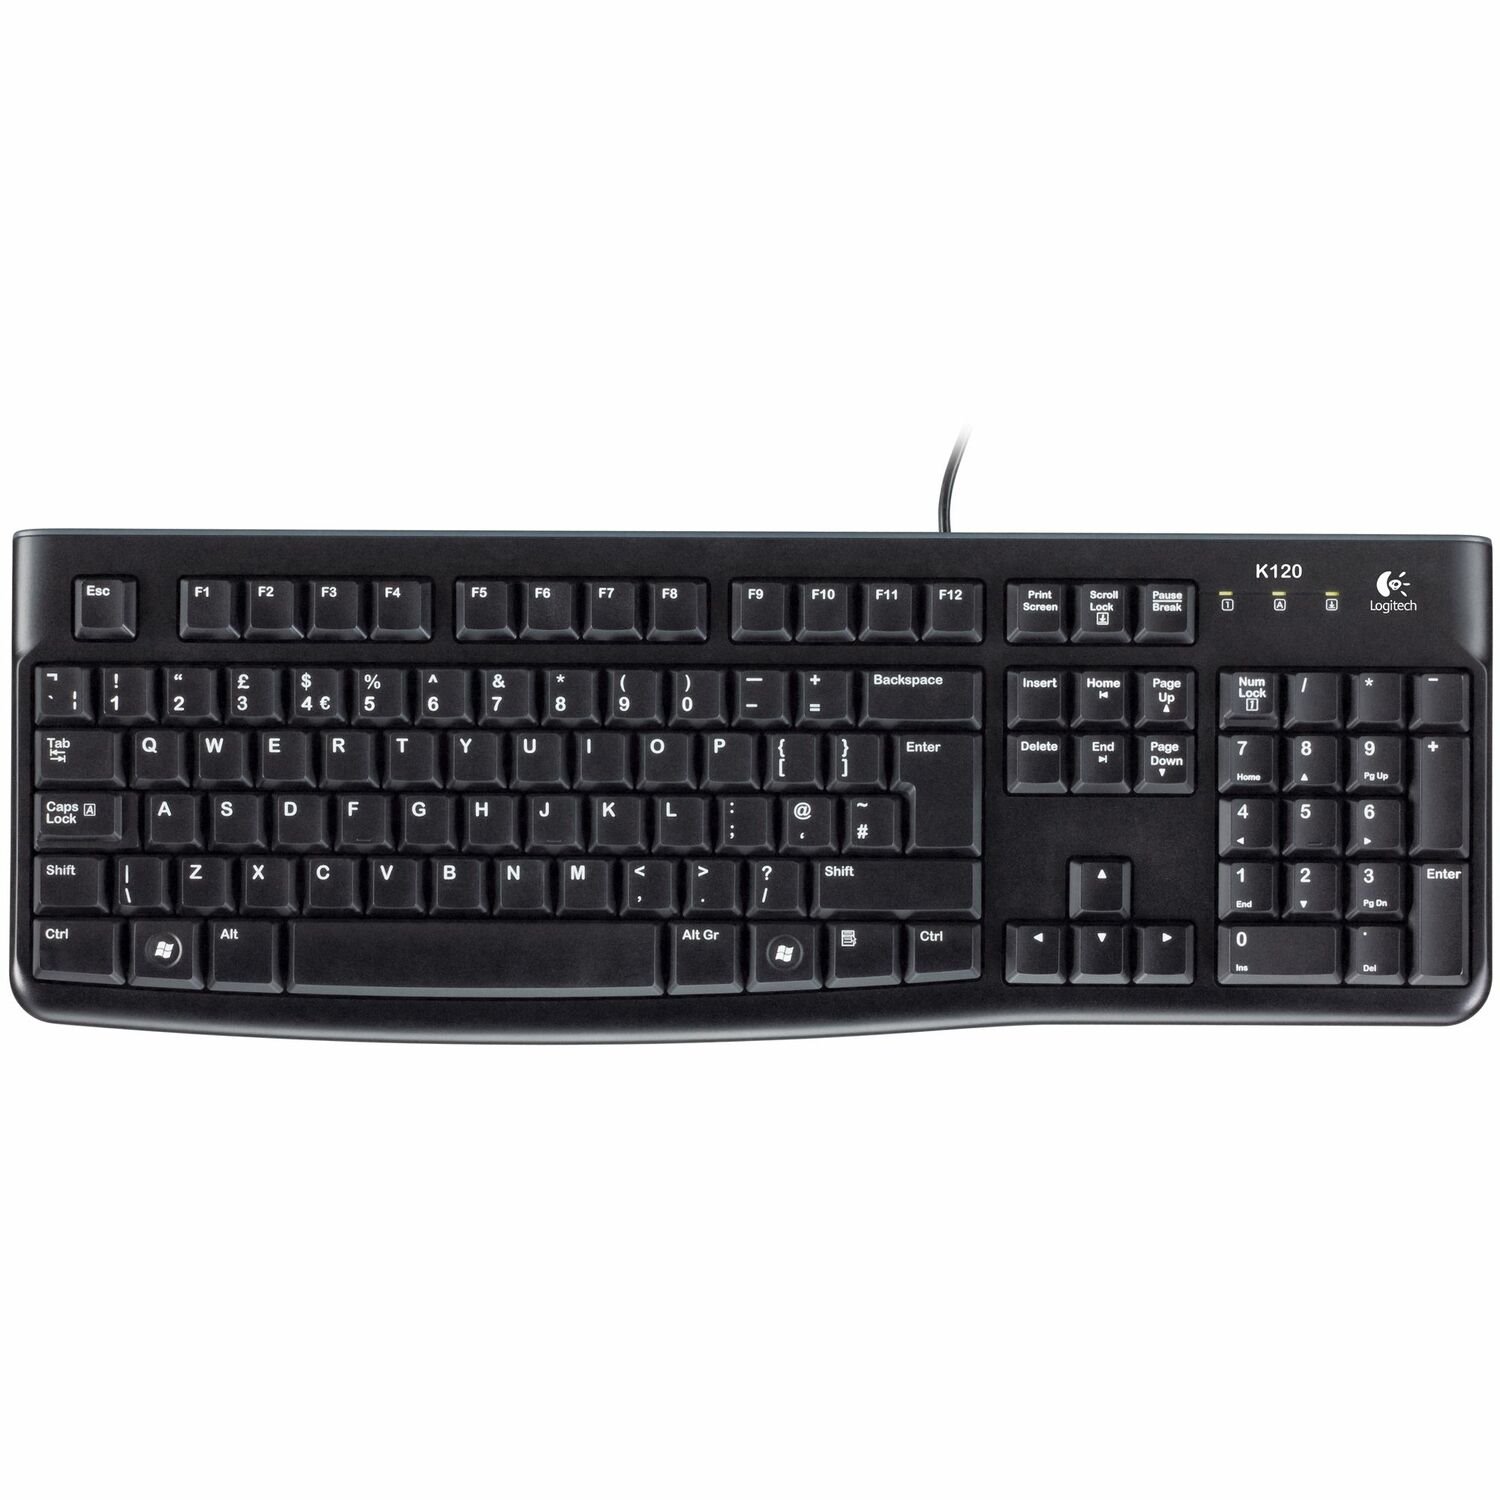 Logitech K120 Keyboard - Cable Connectivity - USB Interface - AZERTY Layout - Black